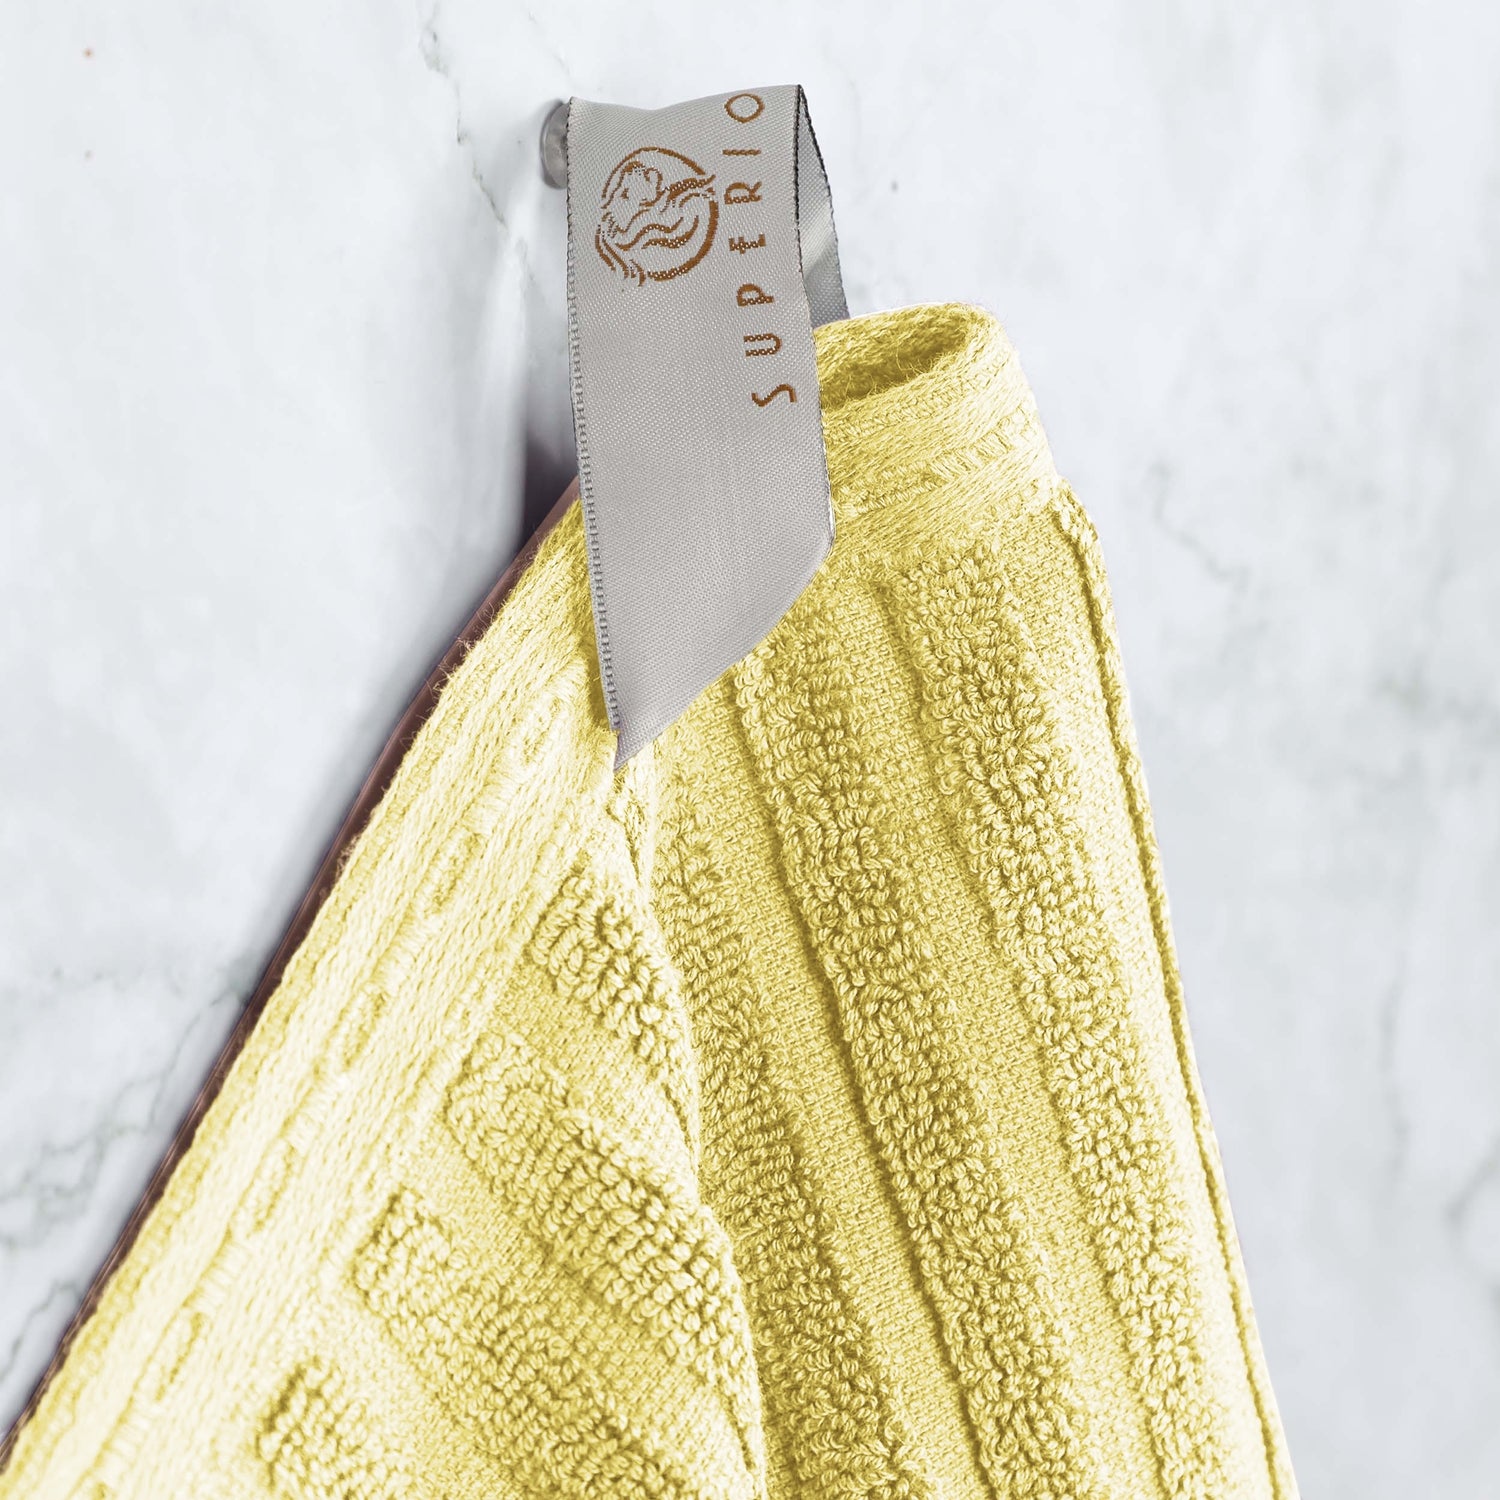 Ribbed Textured Cotton Medium Weight 6 Piece Towel Set - Golden Mist